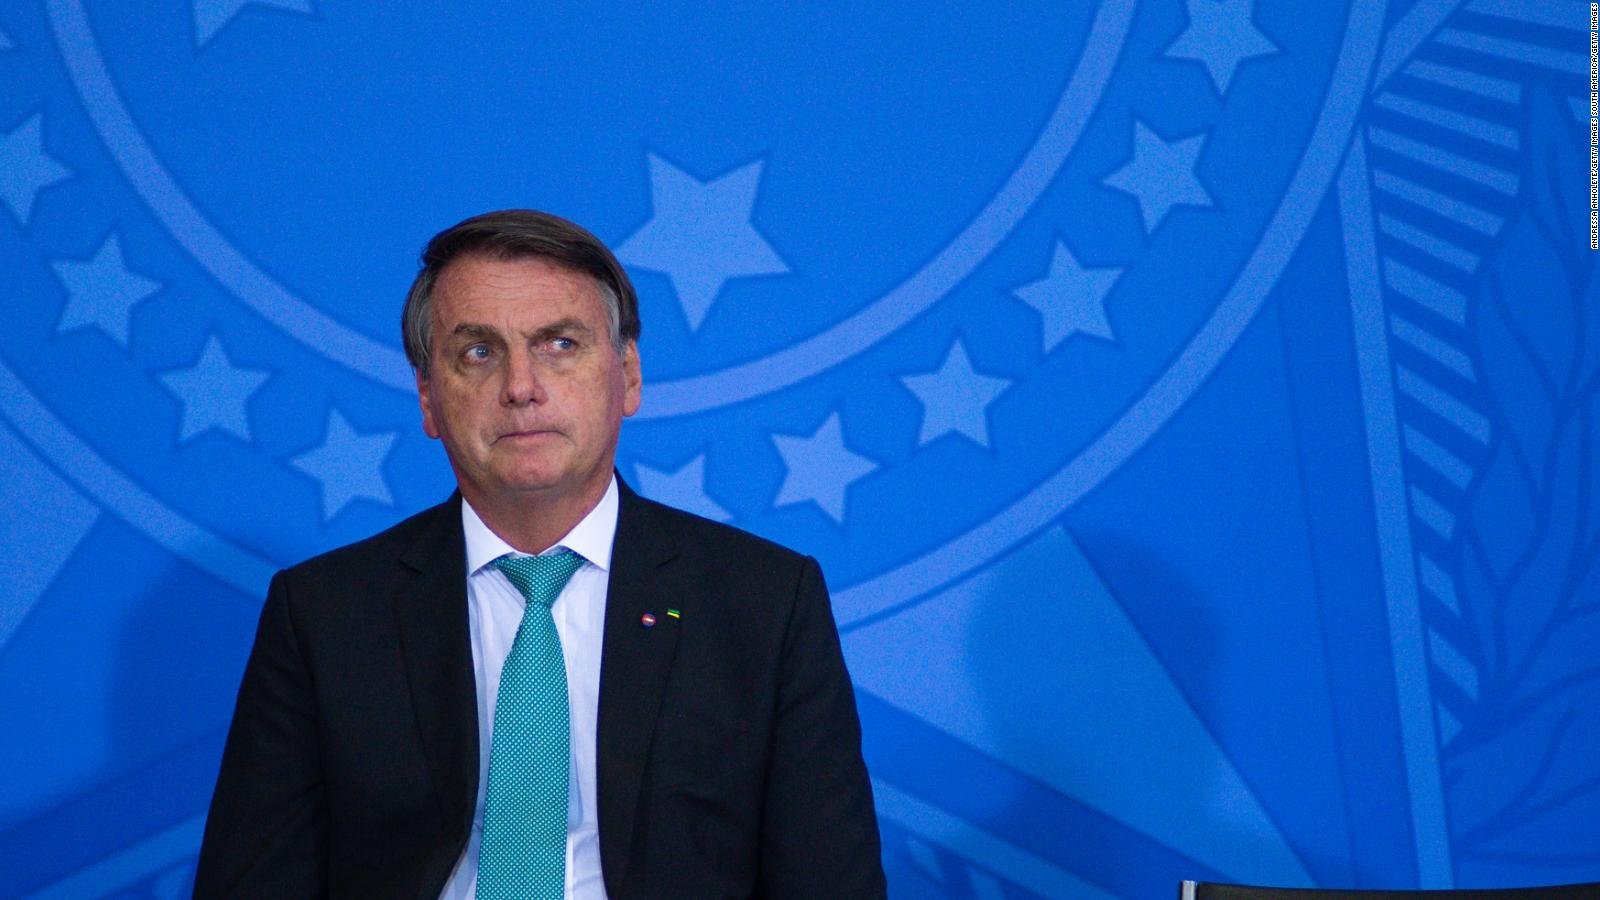 Senado de Brasil aprueba informe que acusa a Bolsonaro de crímenes durante pandemia